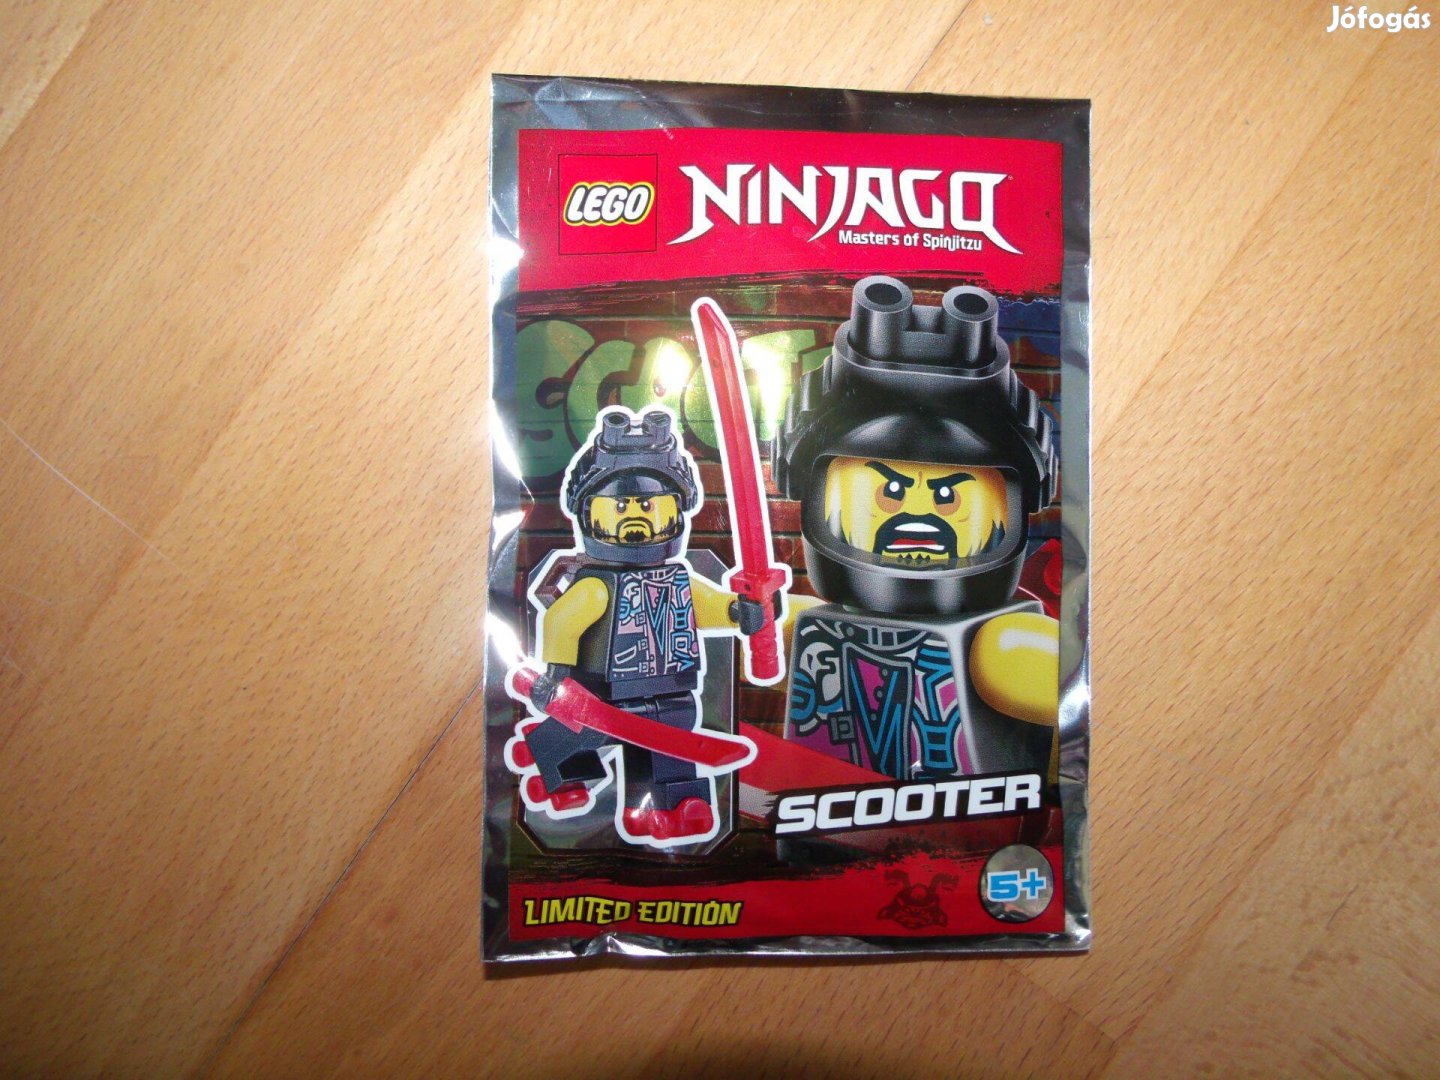 Lego Ninjago bontatlan 891836 Scooter minifigura njo431 polybag figura